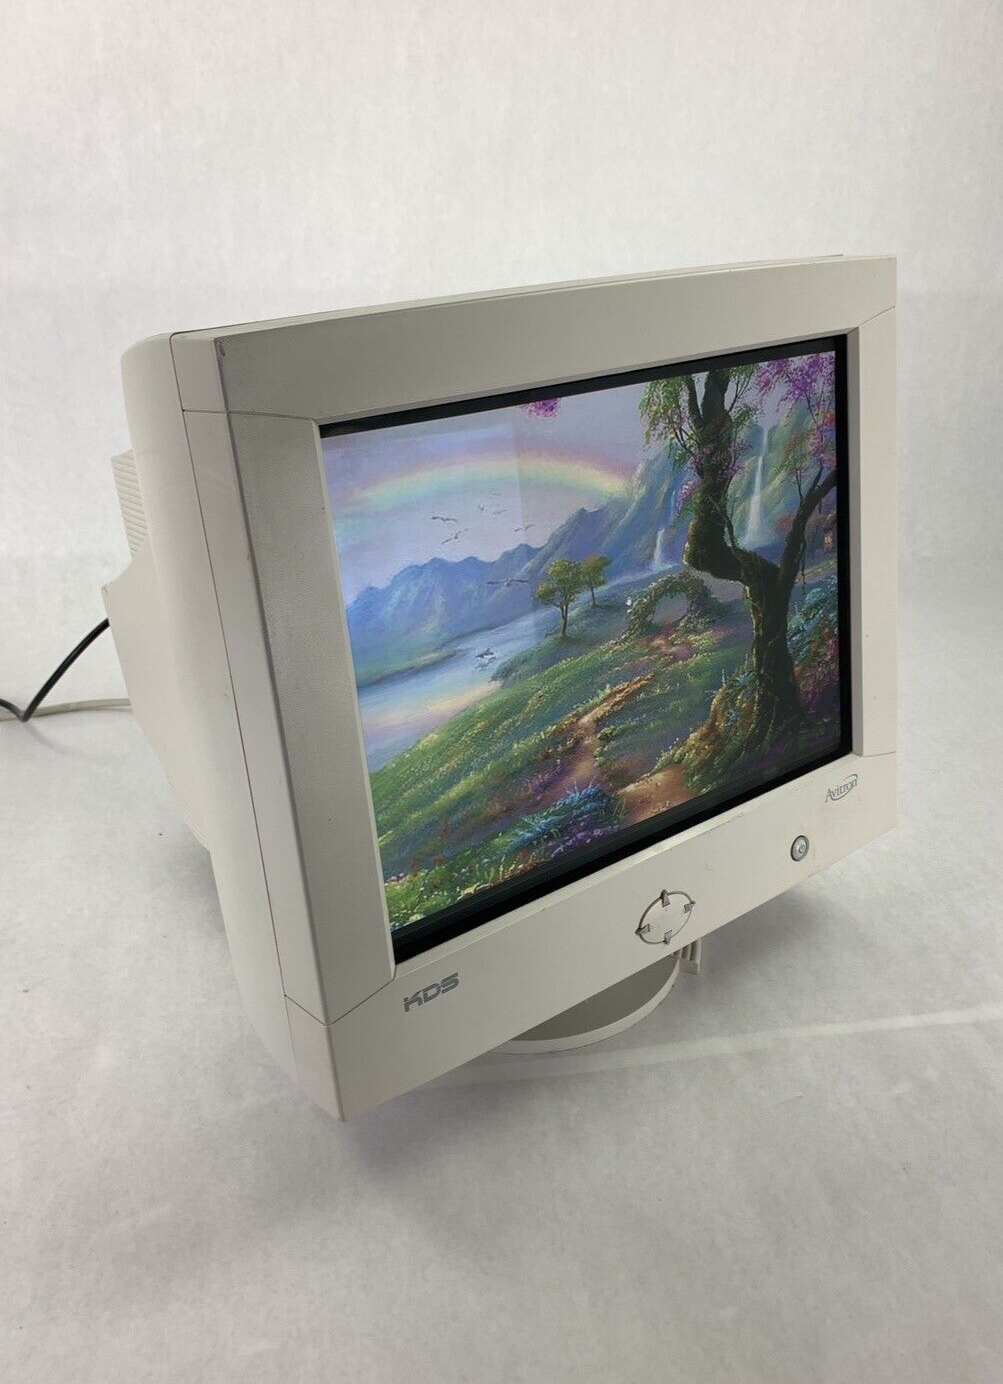 KDS AV-7TF 17” Multi-Scan Color CRT VGA Monitor Retro Gaming